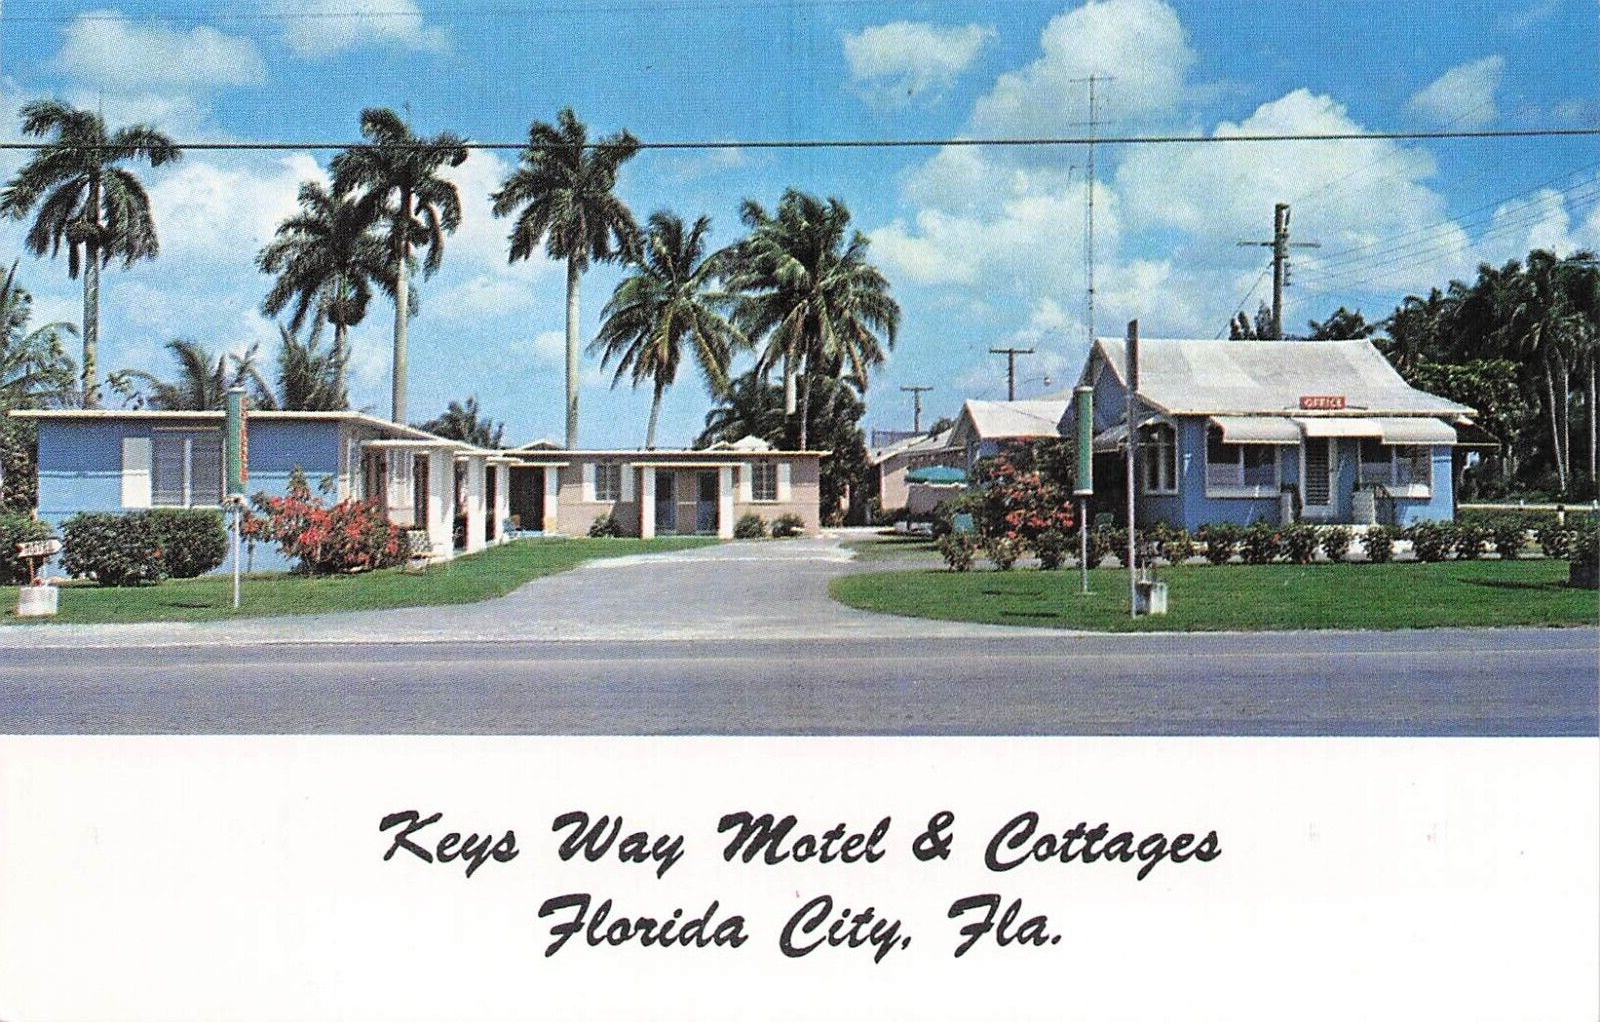 Keys Way Motel & Cottages Florida City, Florida